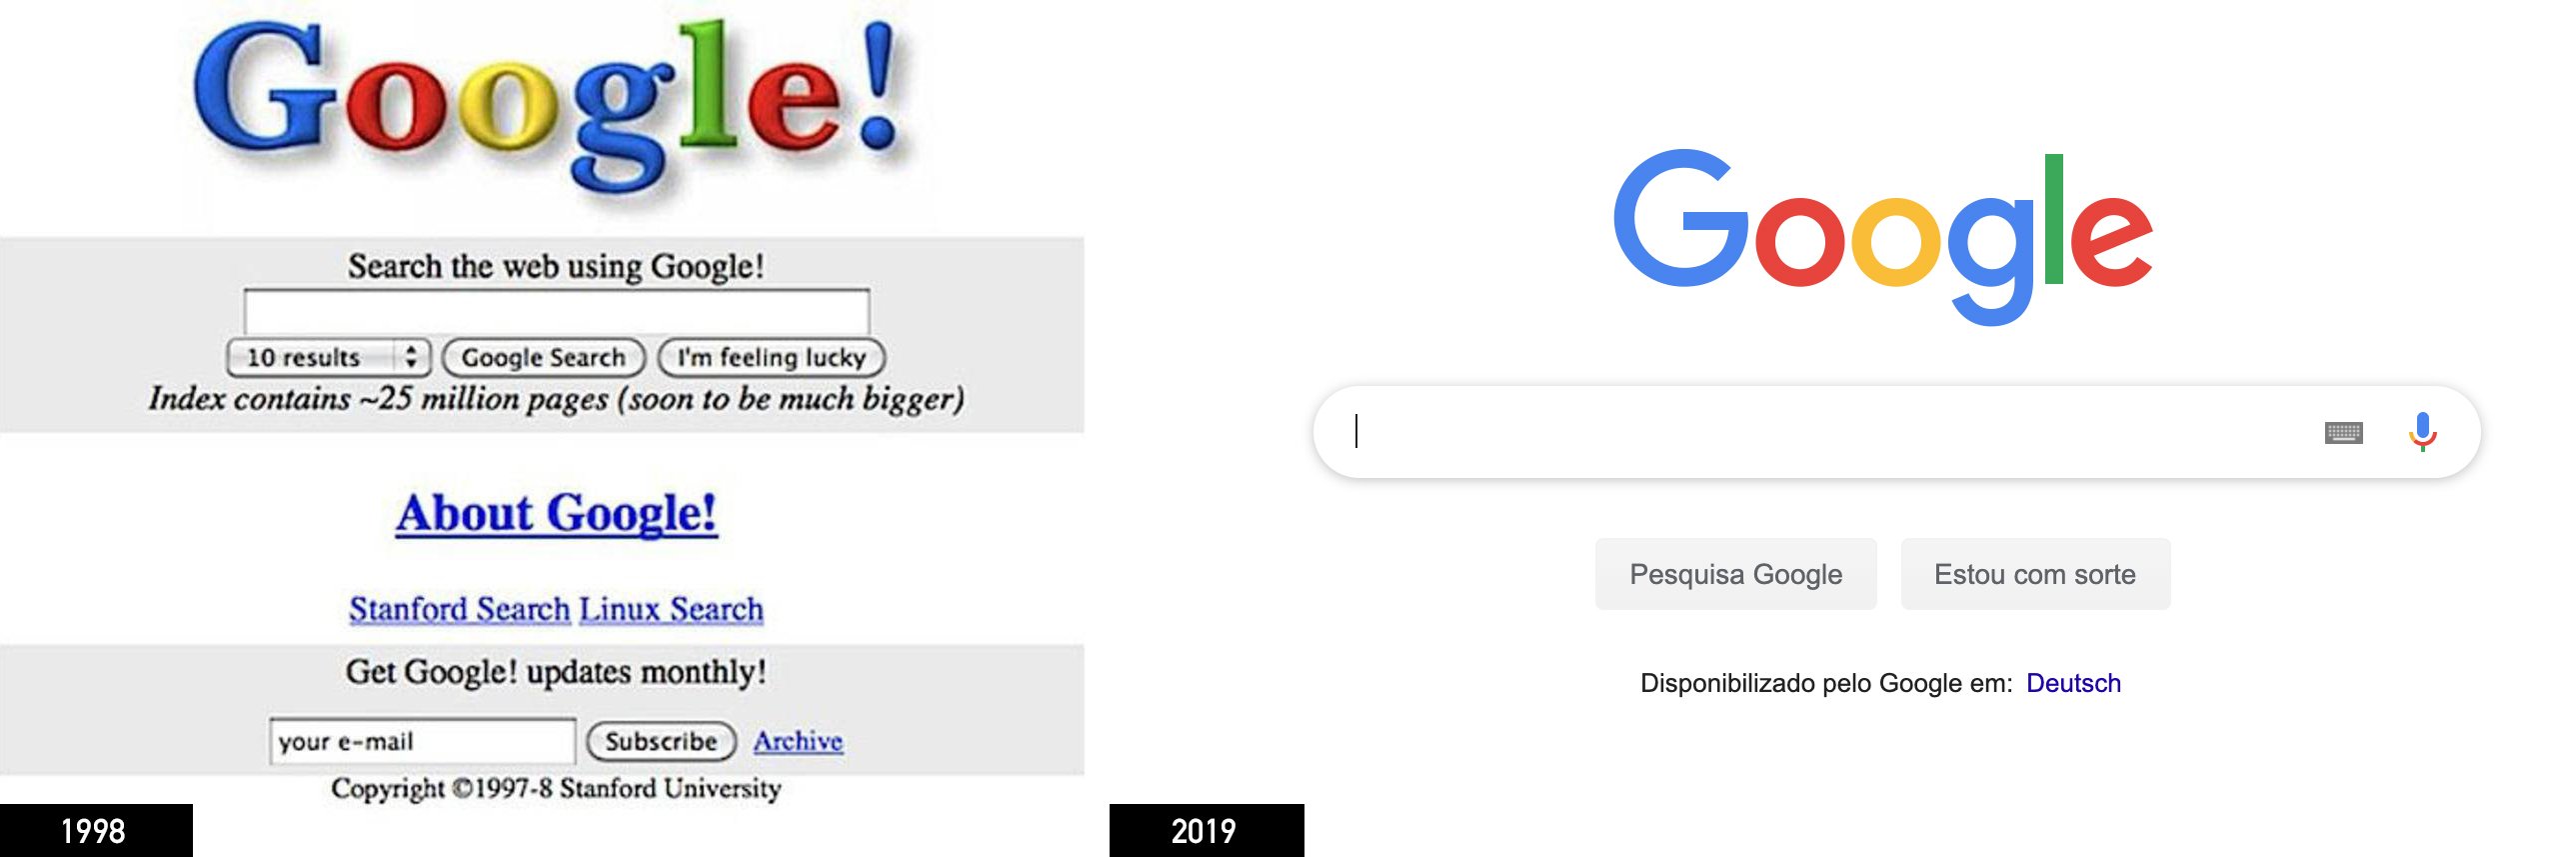 Google в 1998 и 2019 годах